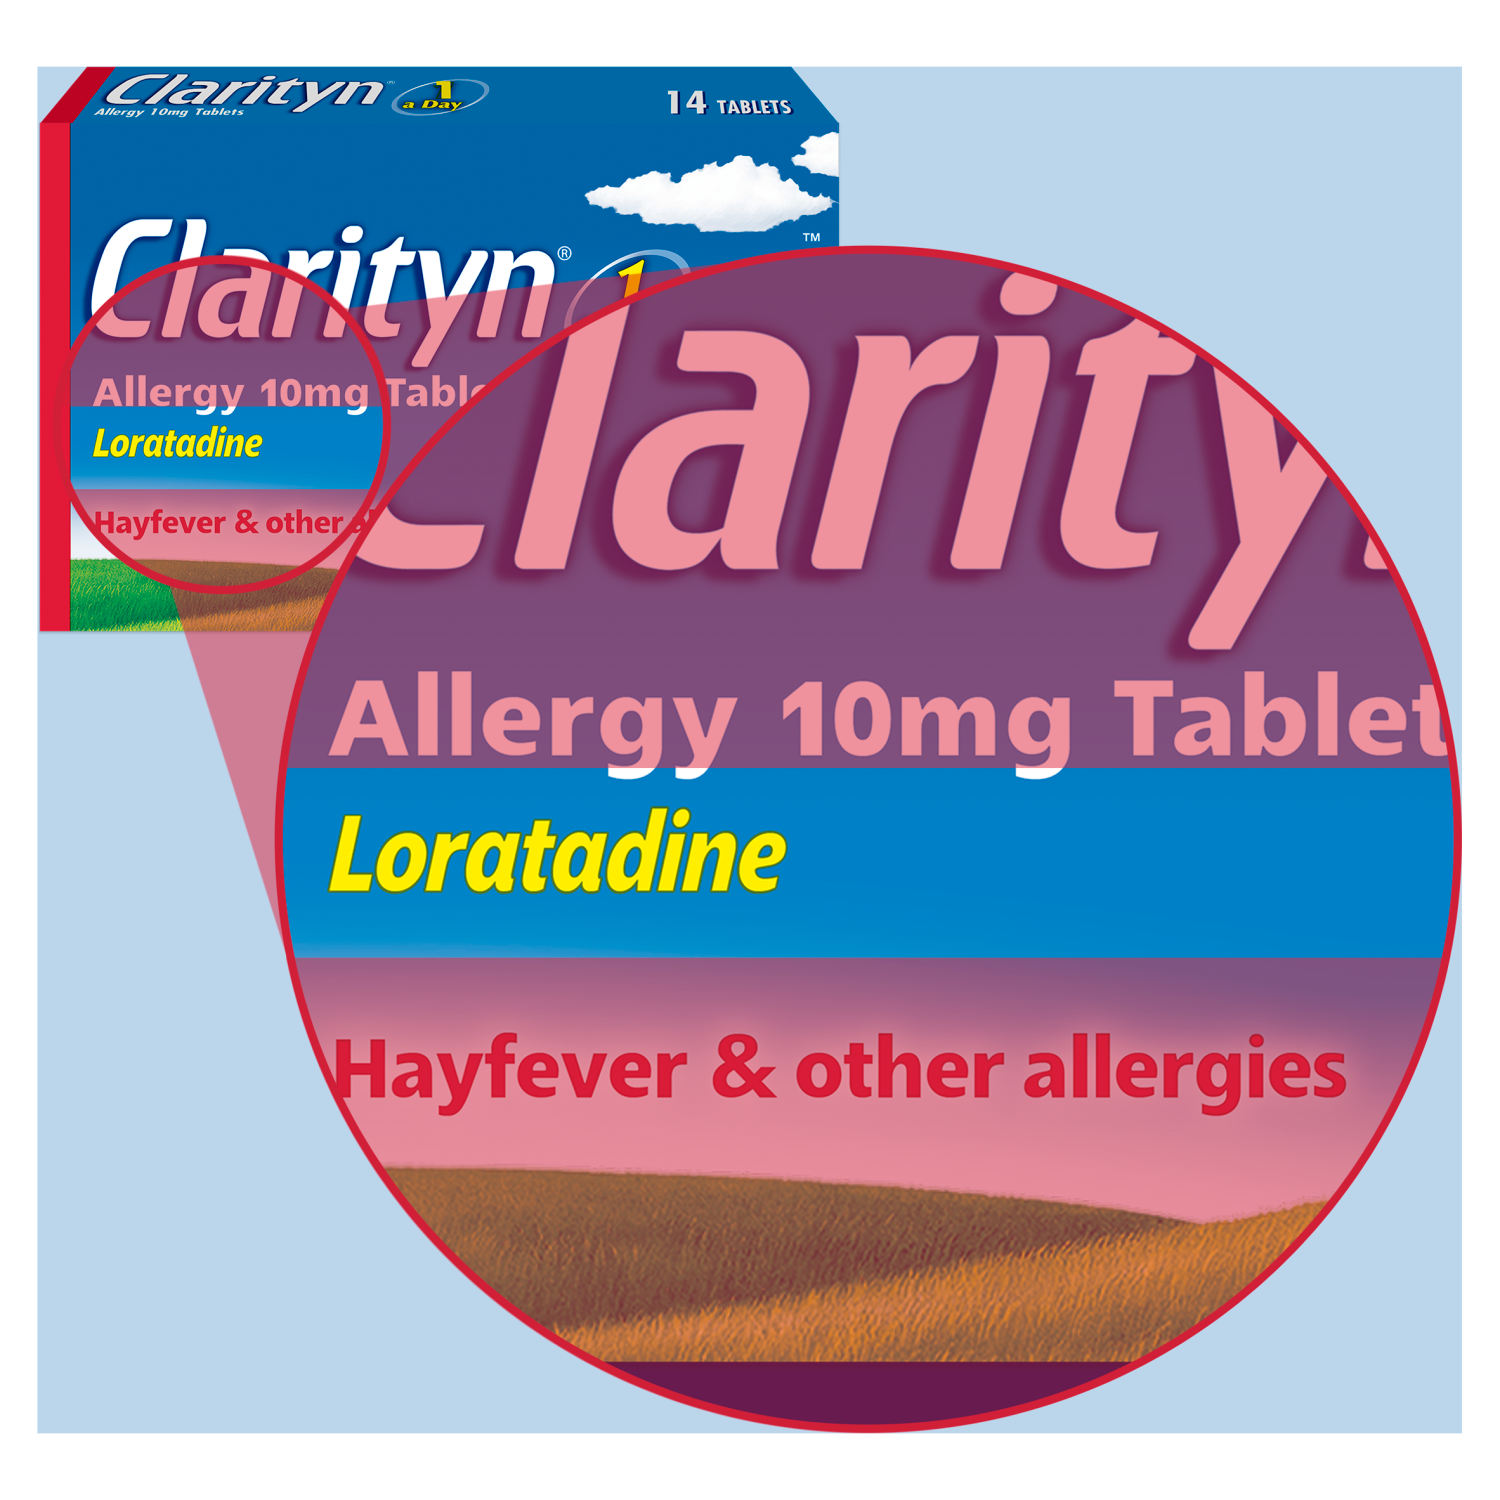 Clarityn Allergy 10mg Tablets 14 tablets